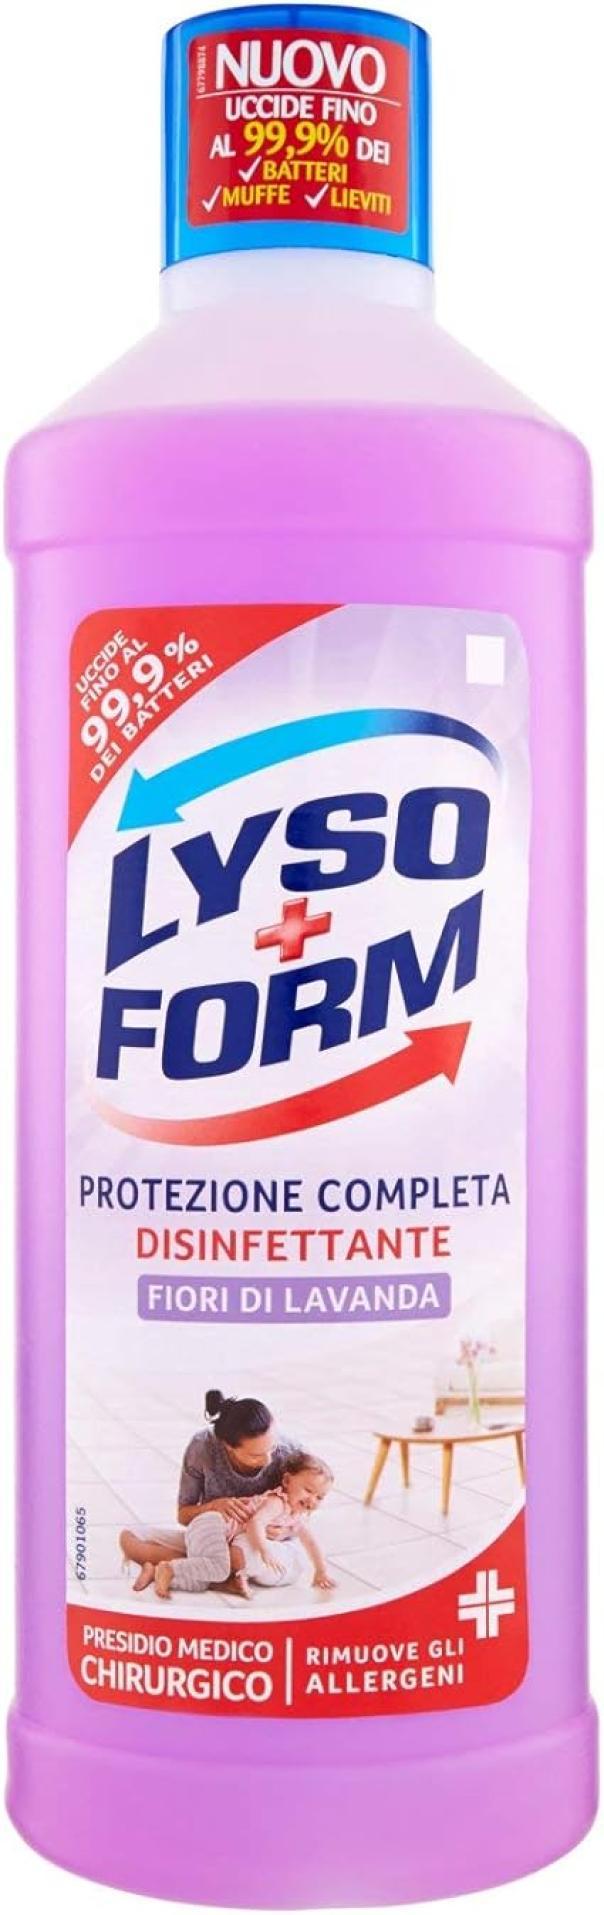 detergente-disinfettante-lavanda-lysoform-125-cl-1